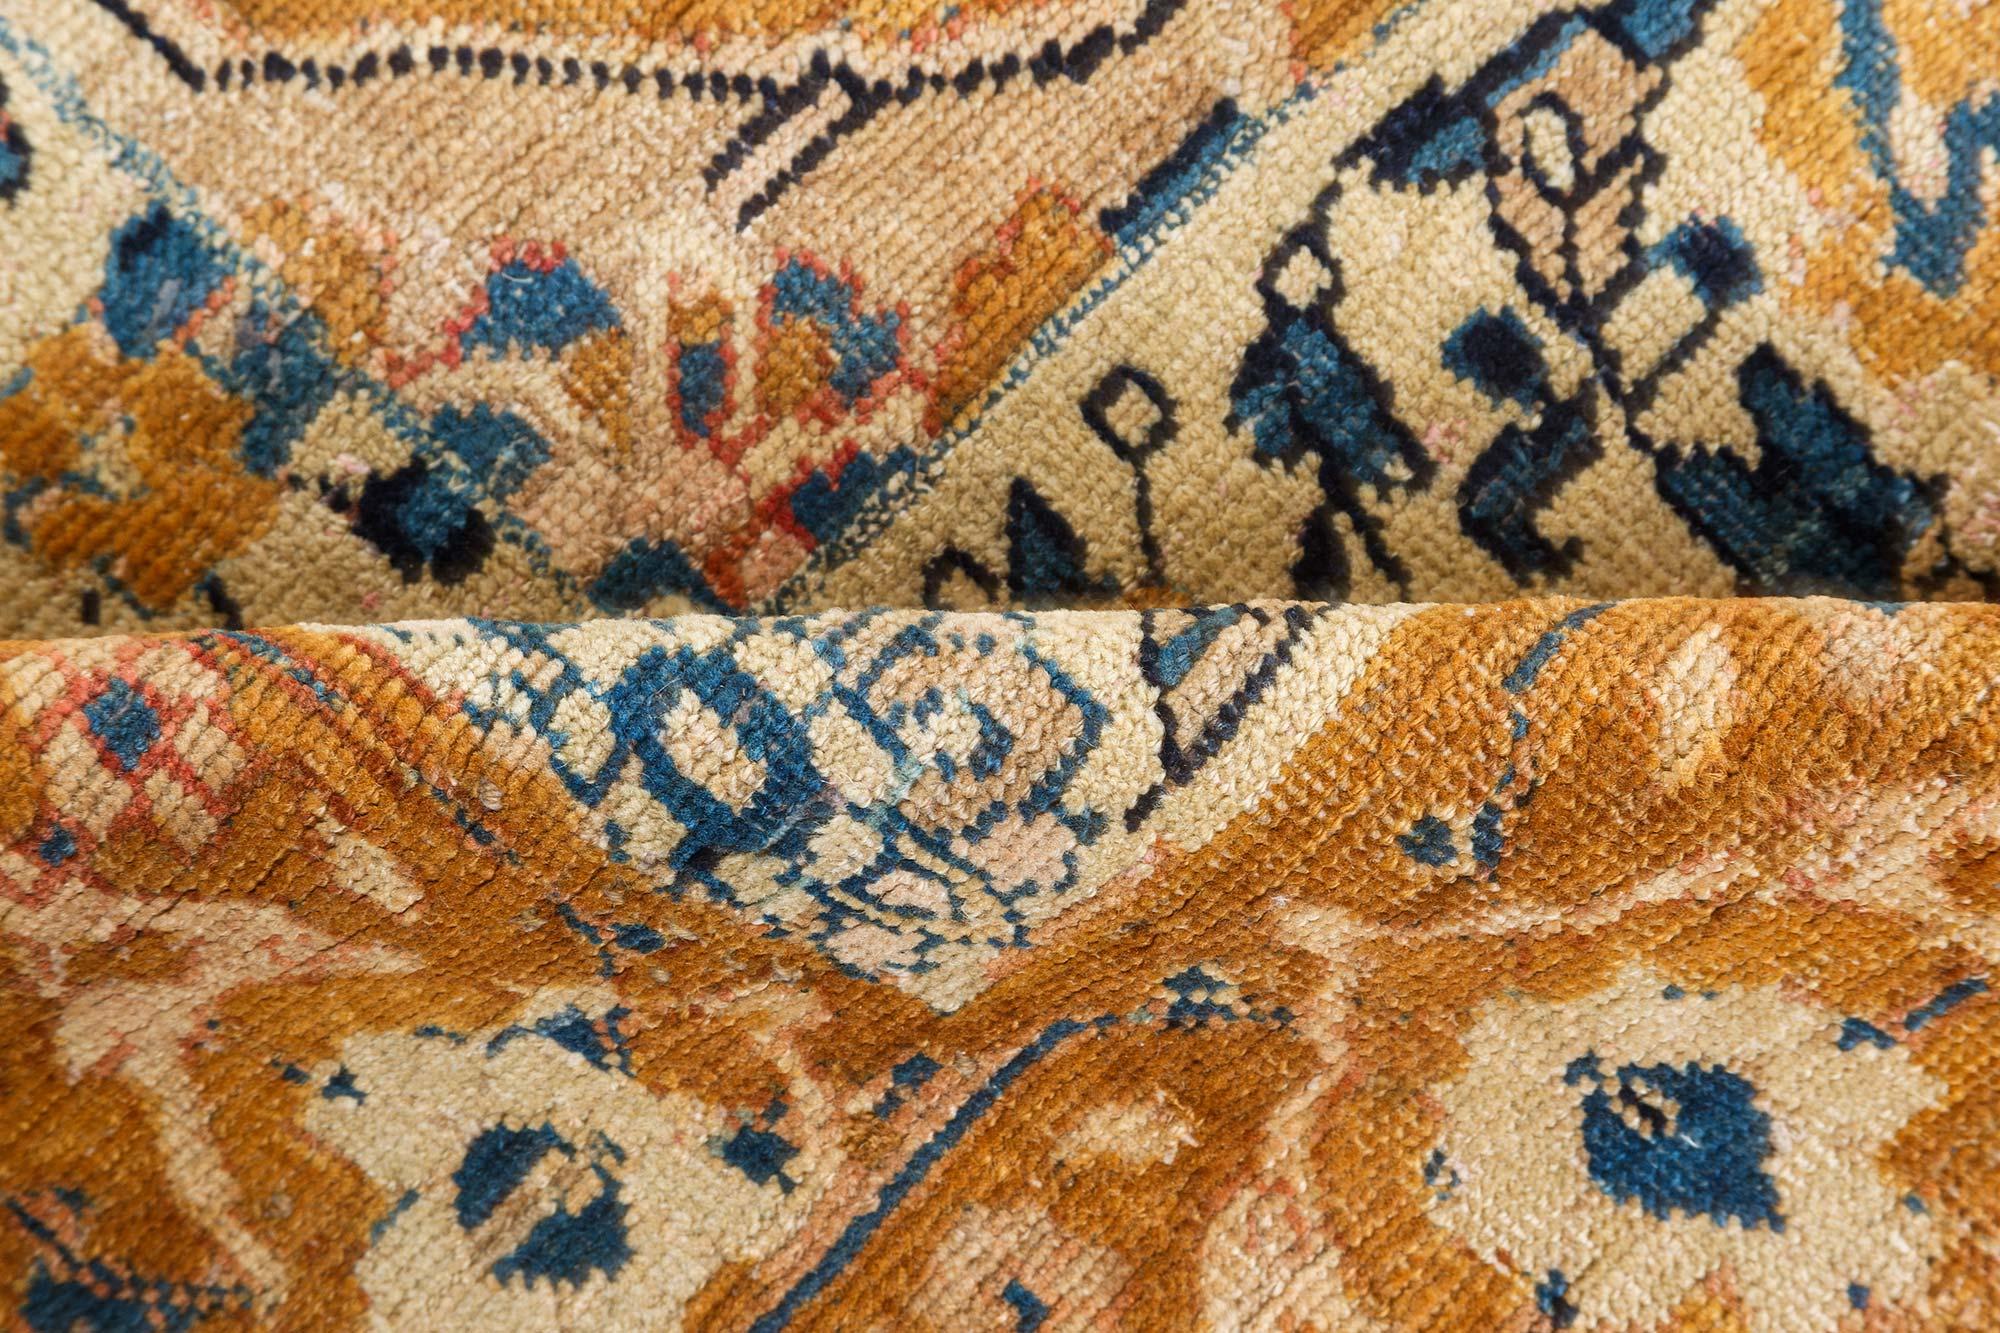 Authentic Antique Persian Bidjar Orange handmade wool rug
Size: 11'0